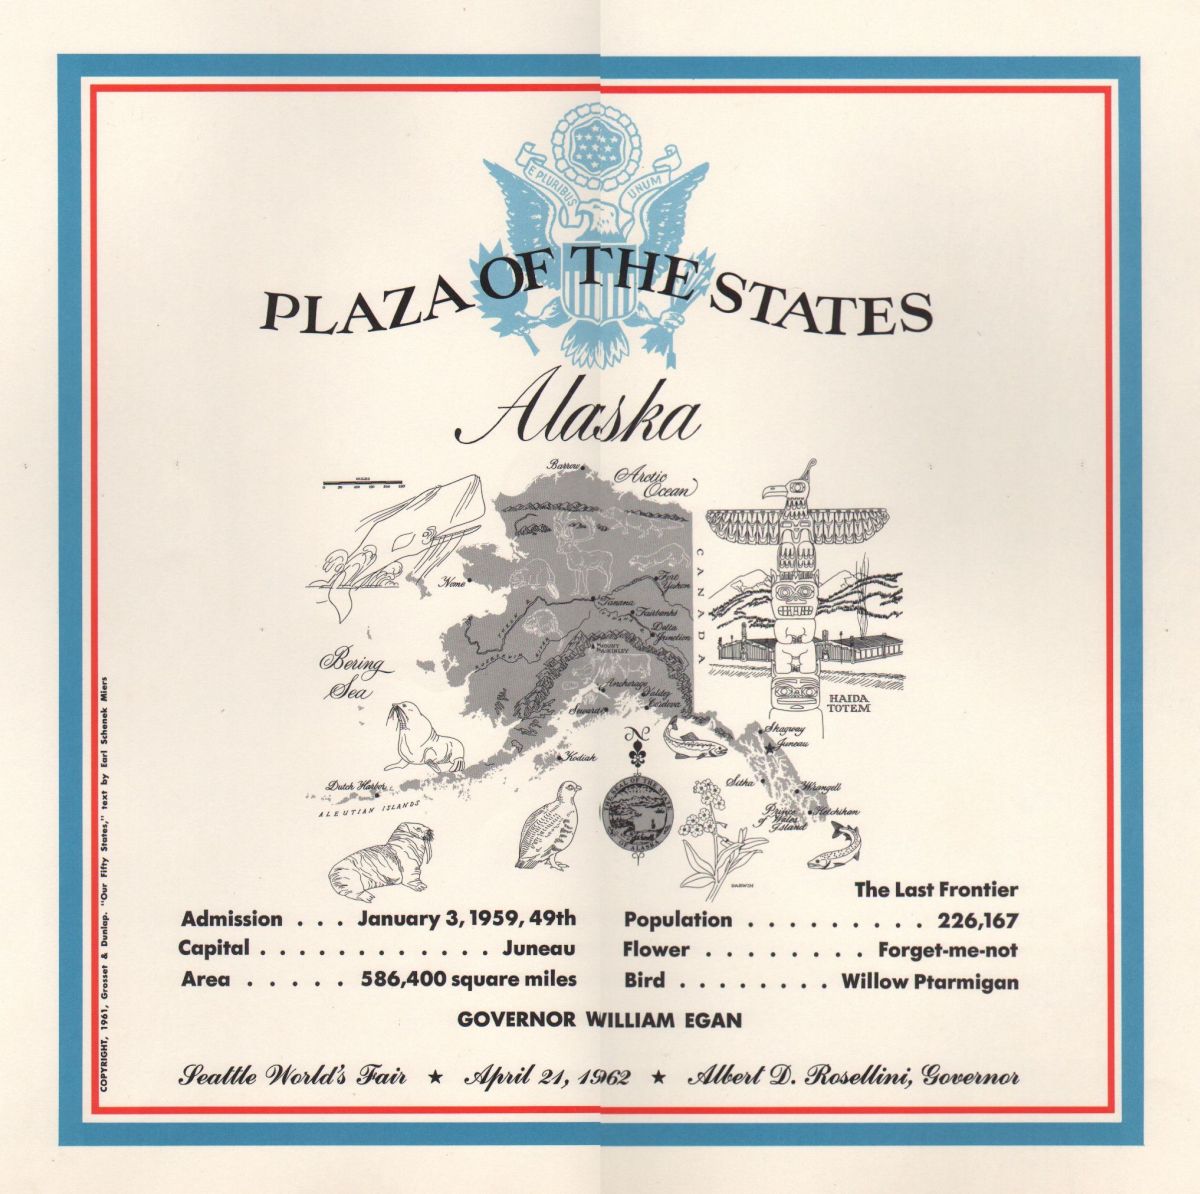 Alaska State Information